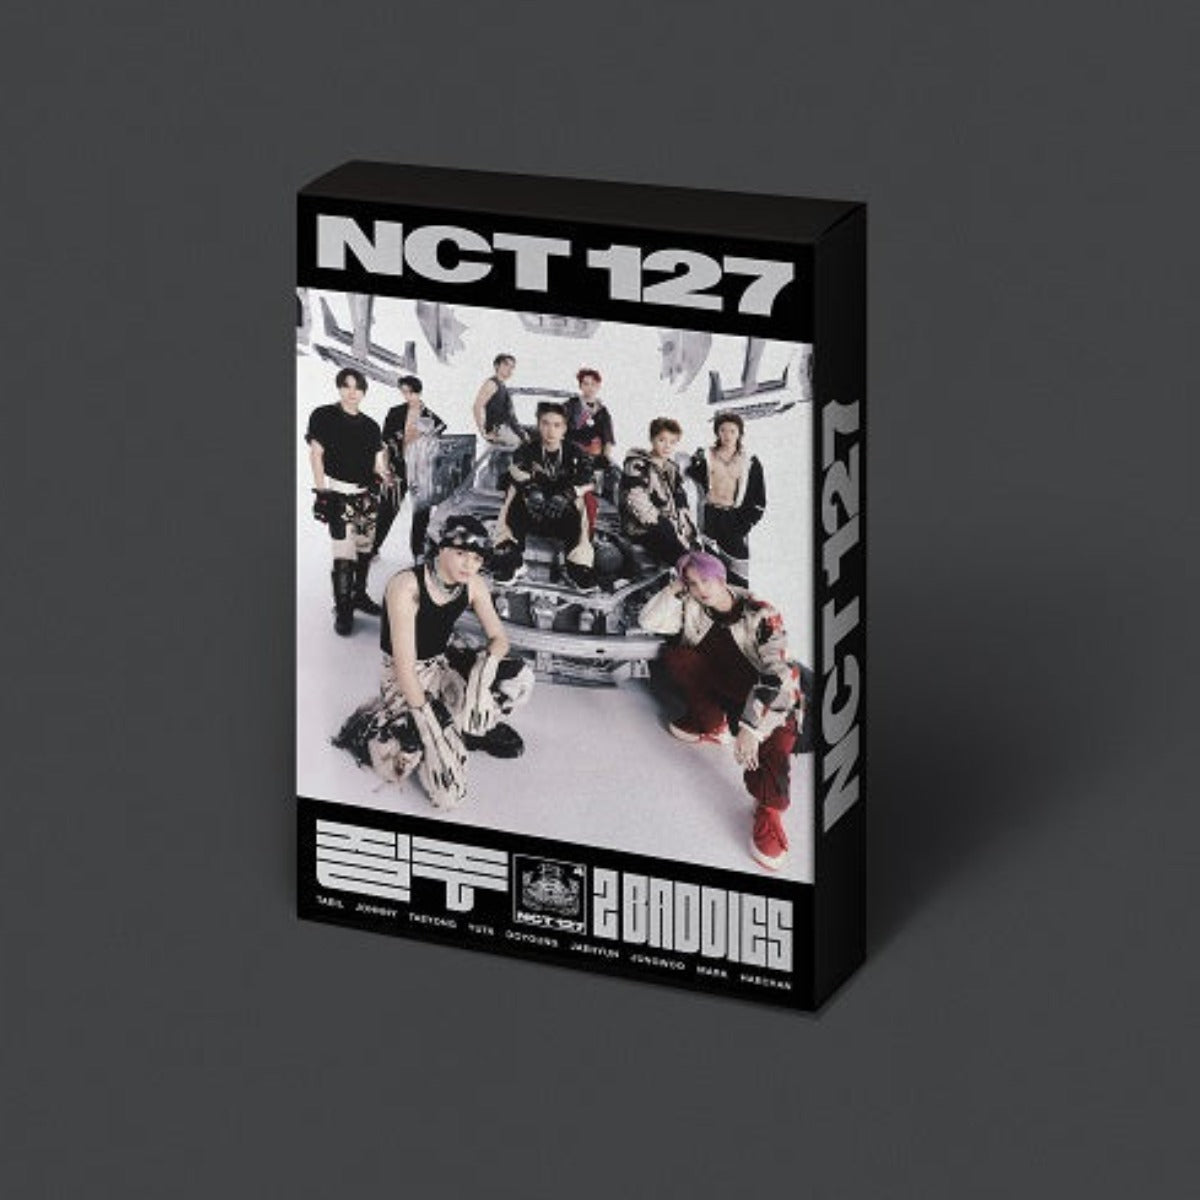 NCT 127 Vol. 4 - 2 Baddies (SMC version)